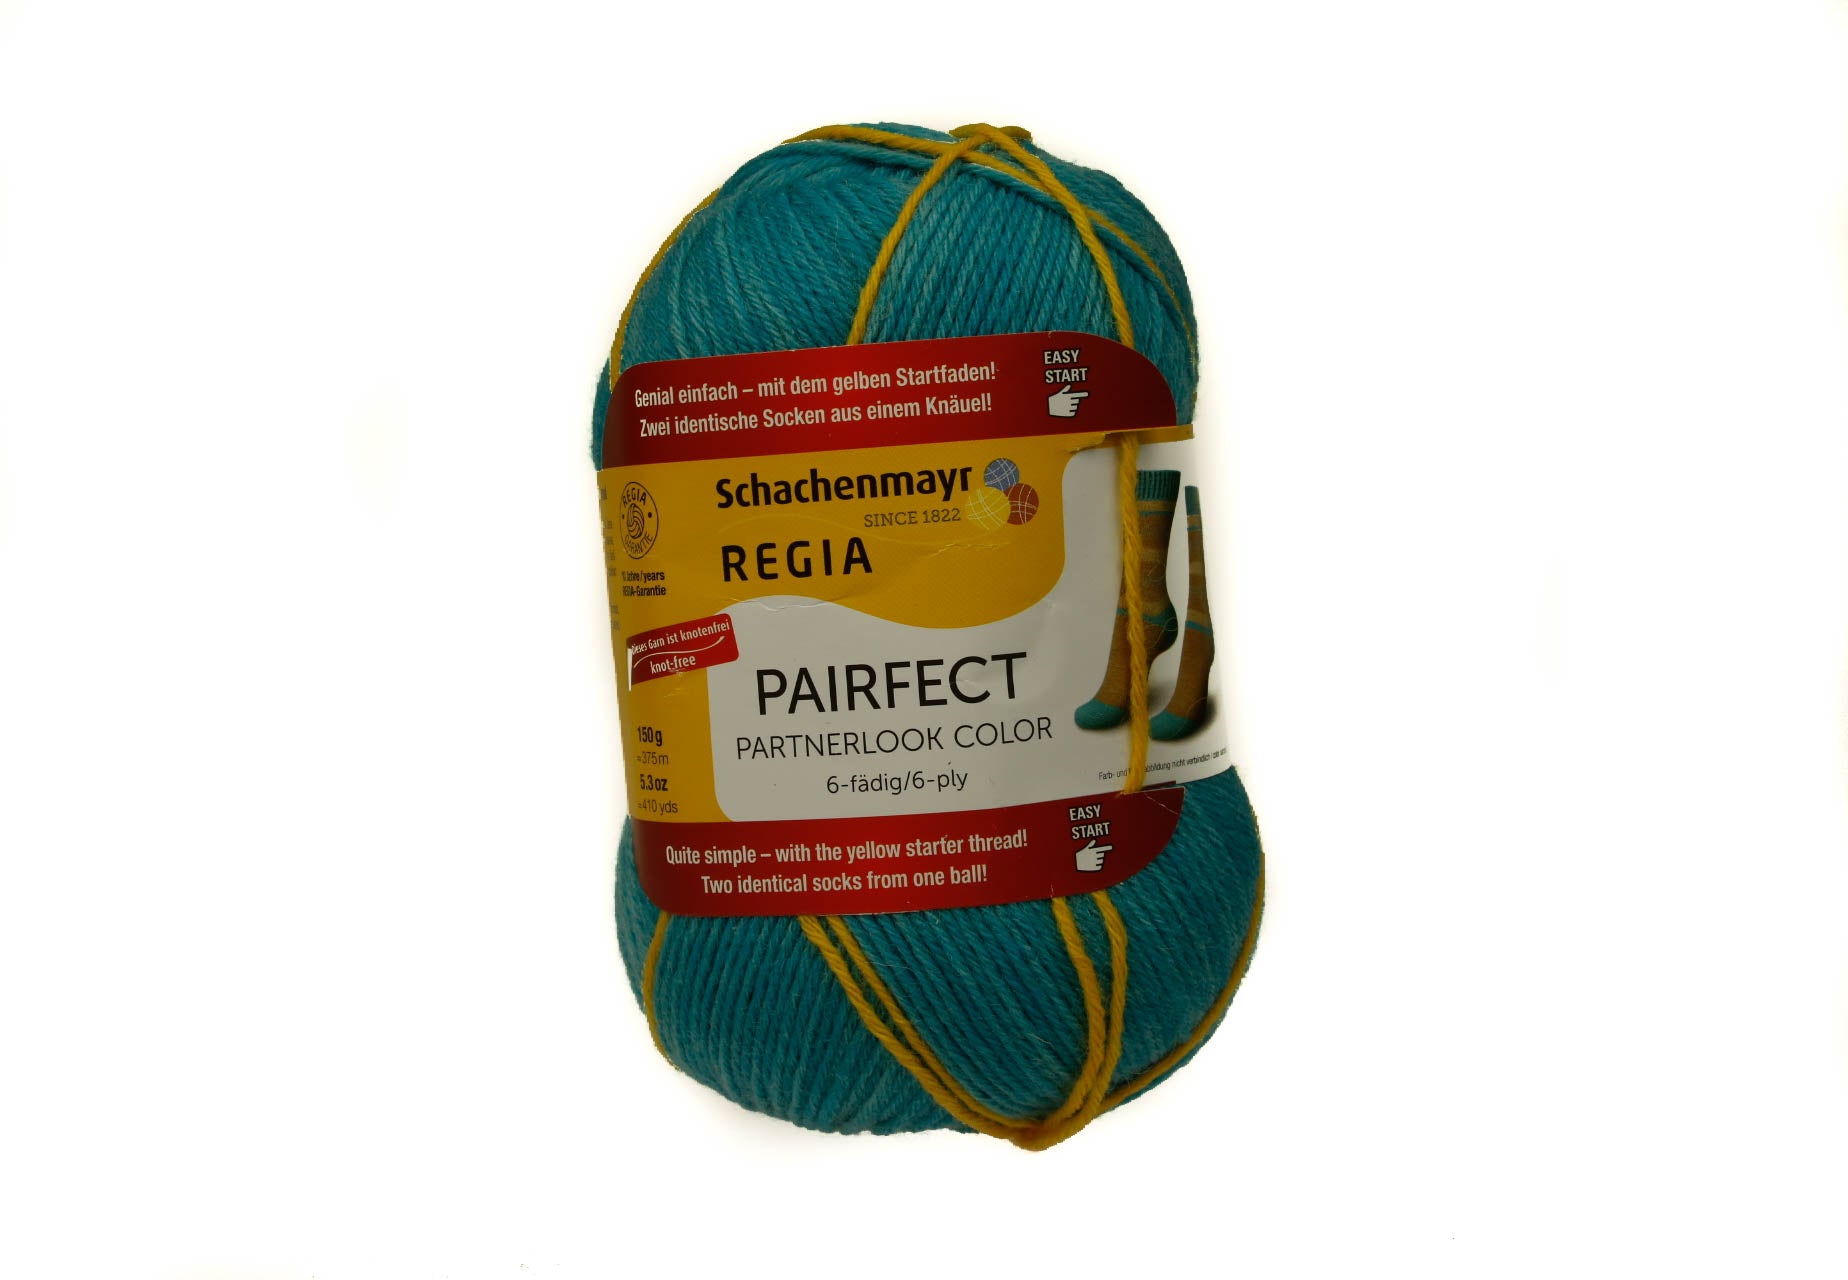 Regia Pairfect Partnerlook Color 6-ply | WoolWinders Shop